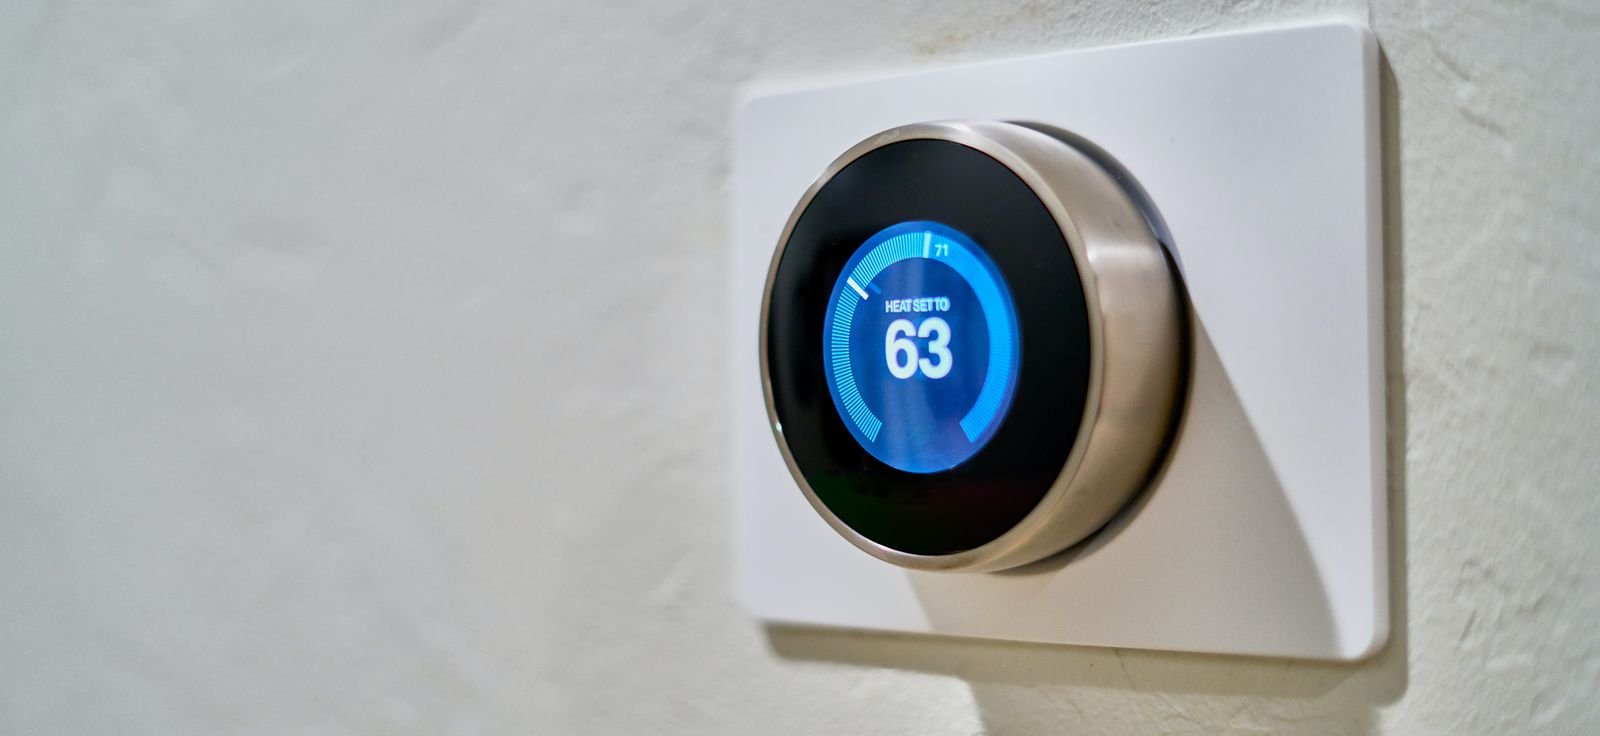 smart home technology thermostat in netzero markham home renovation (1)